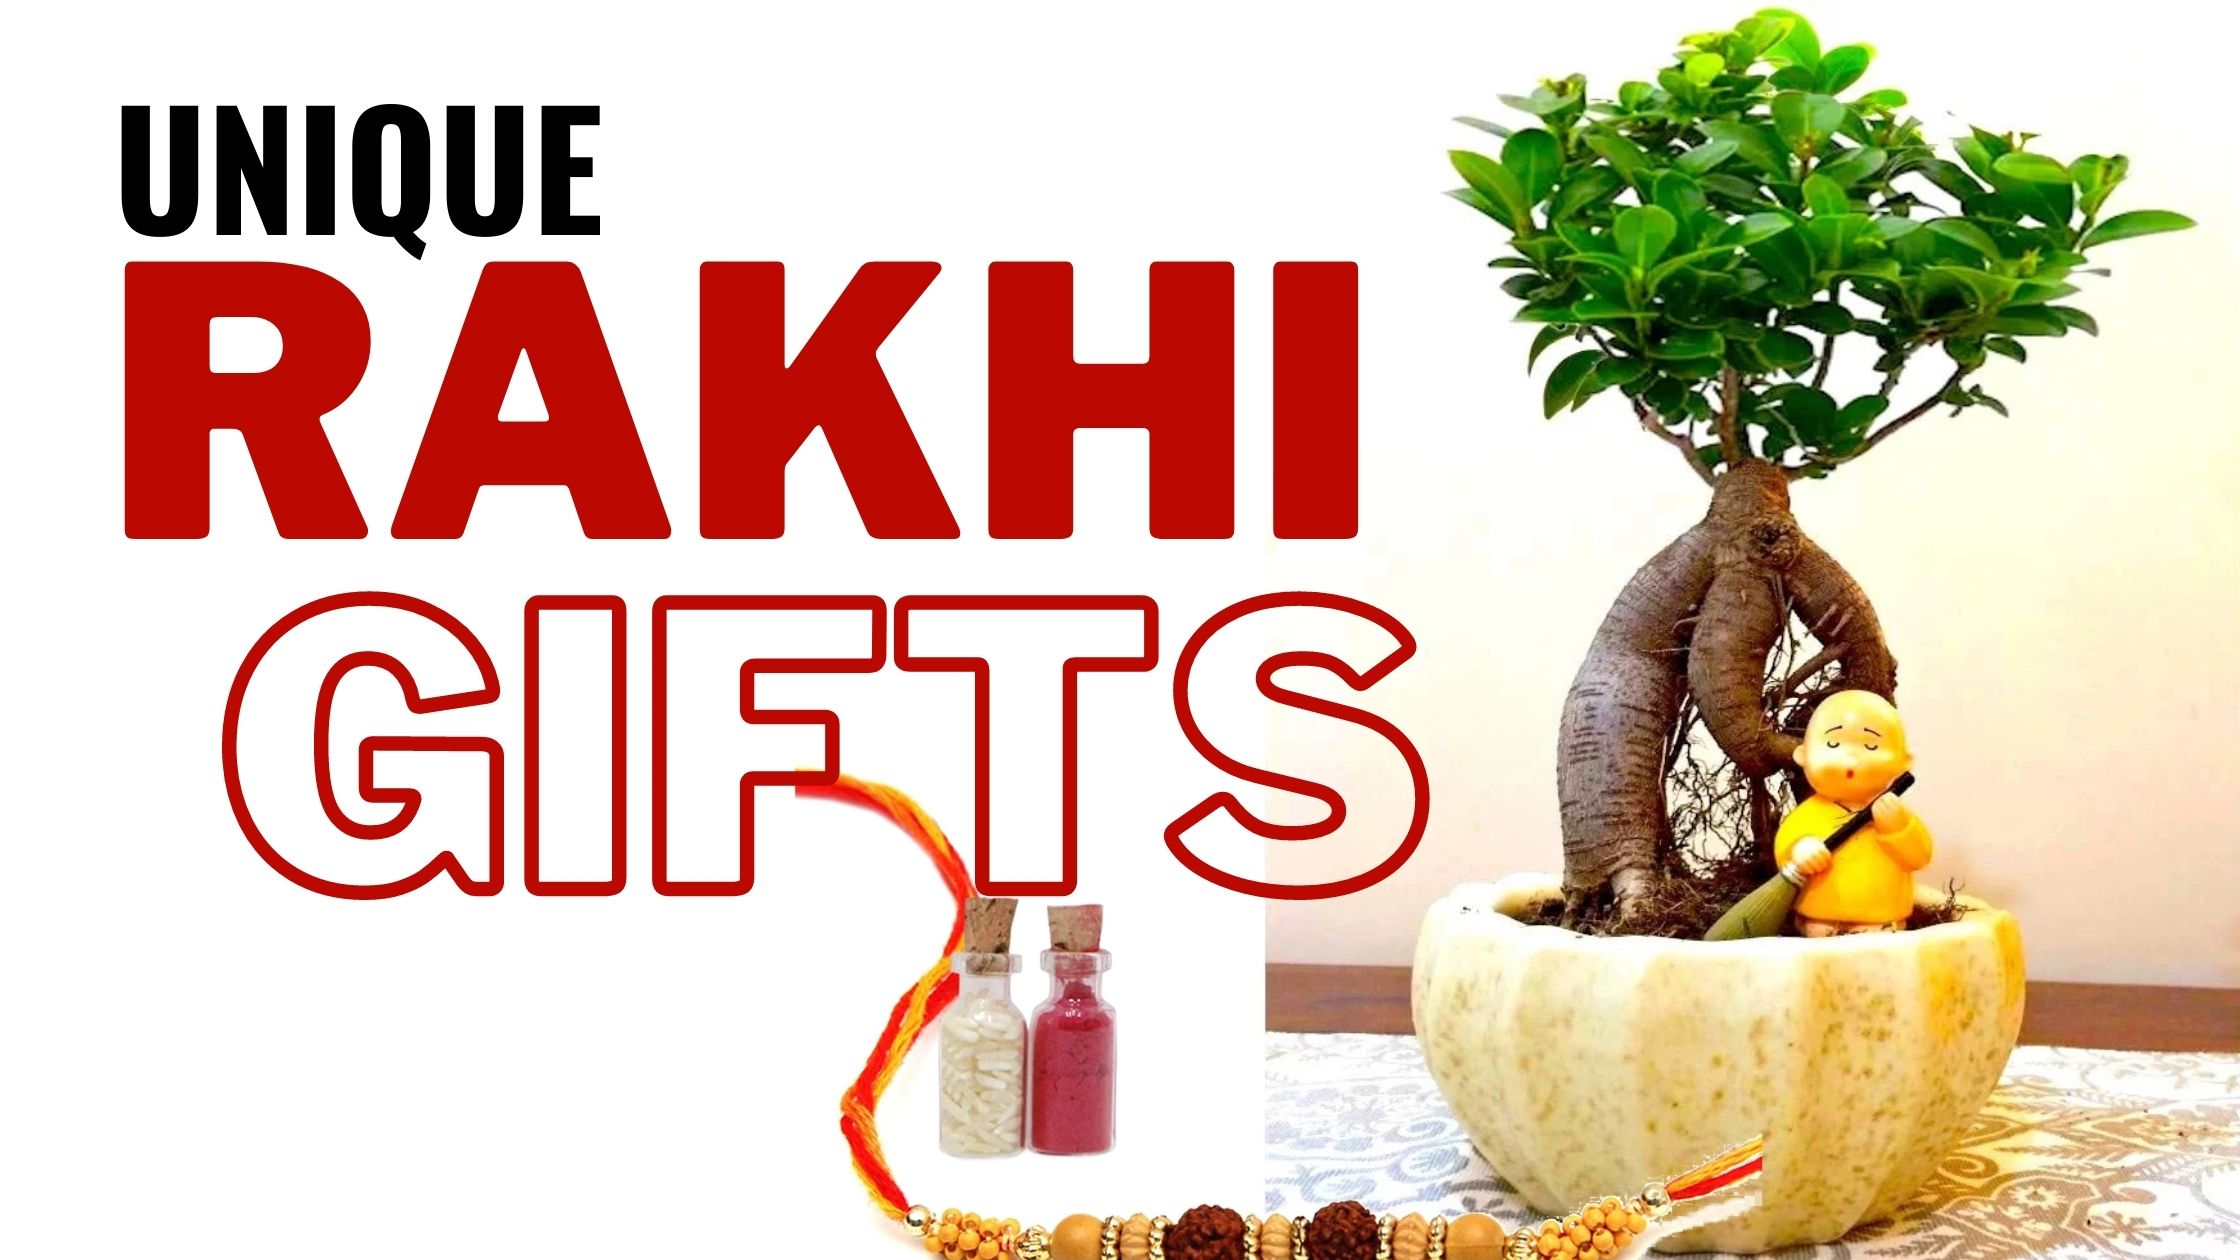 Remarkable Rakhi Gifts For Your Sisters This Raksha Bandhan!